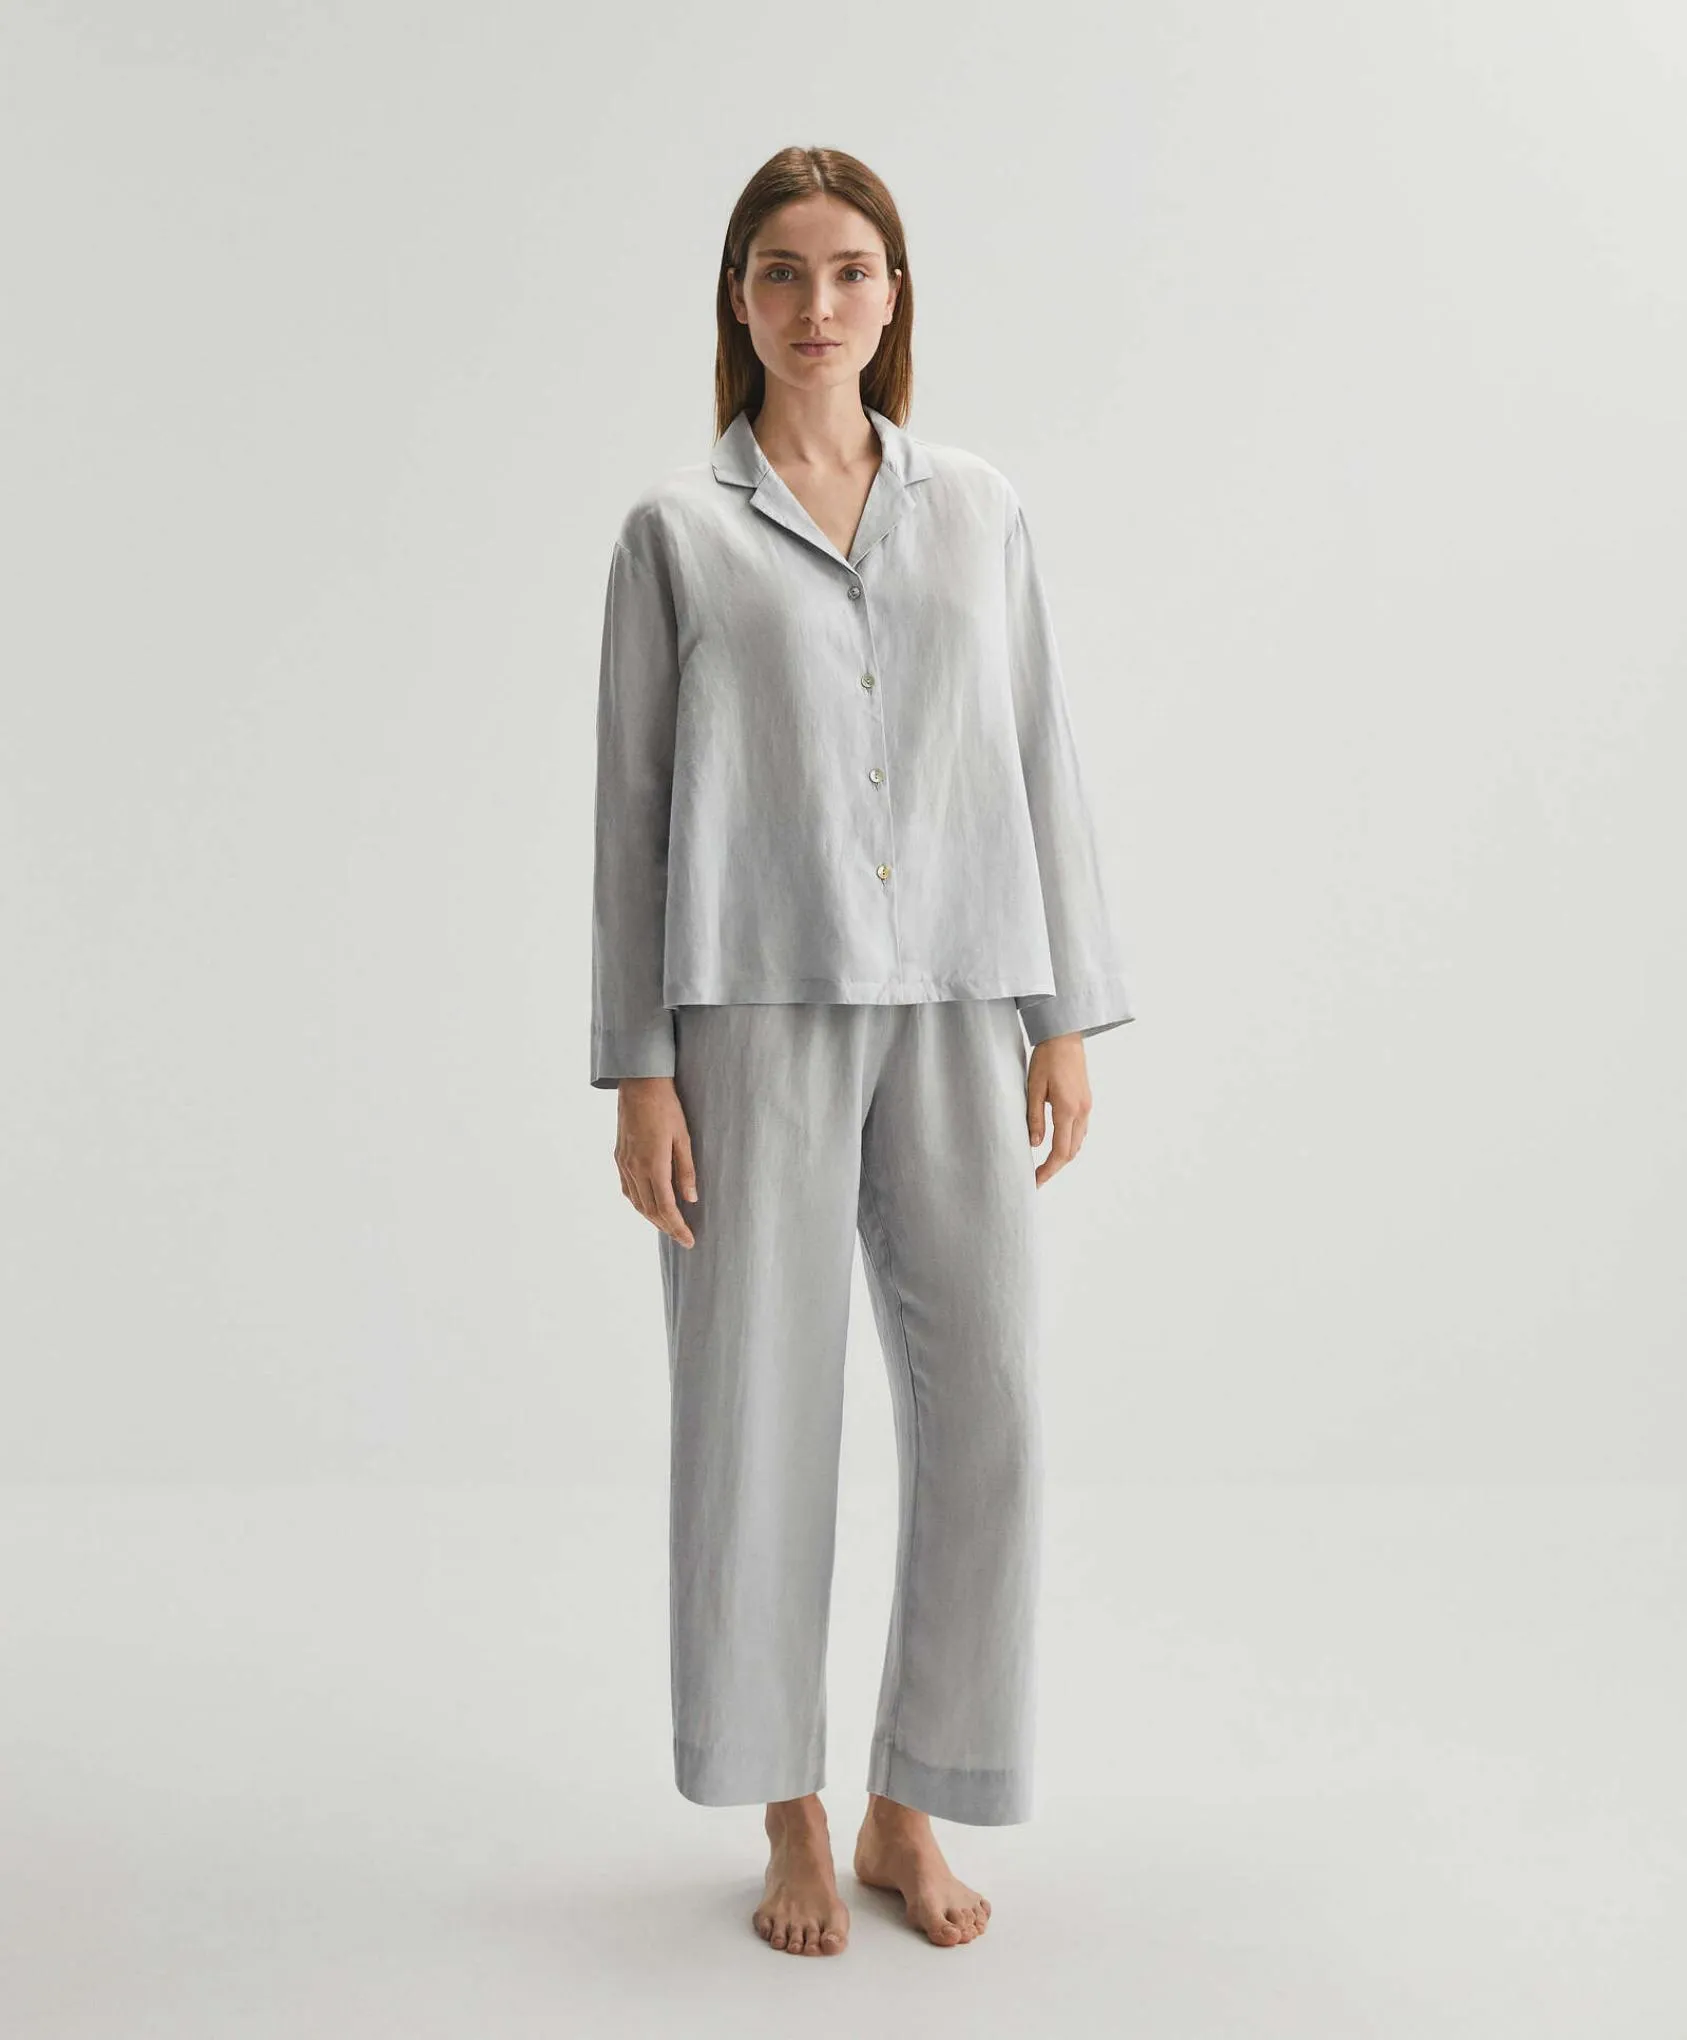 Catalogue Pyjamas et Homewear, page 00003